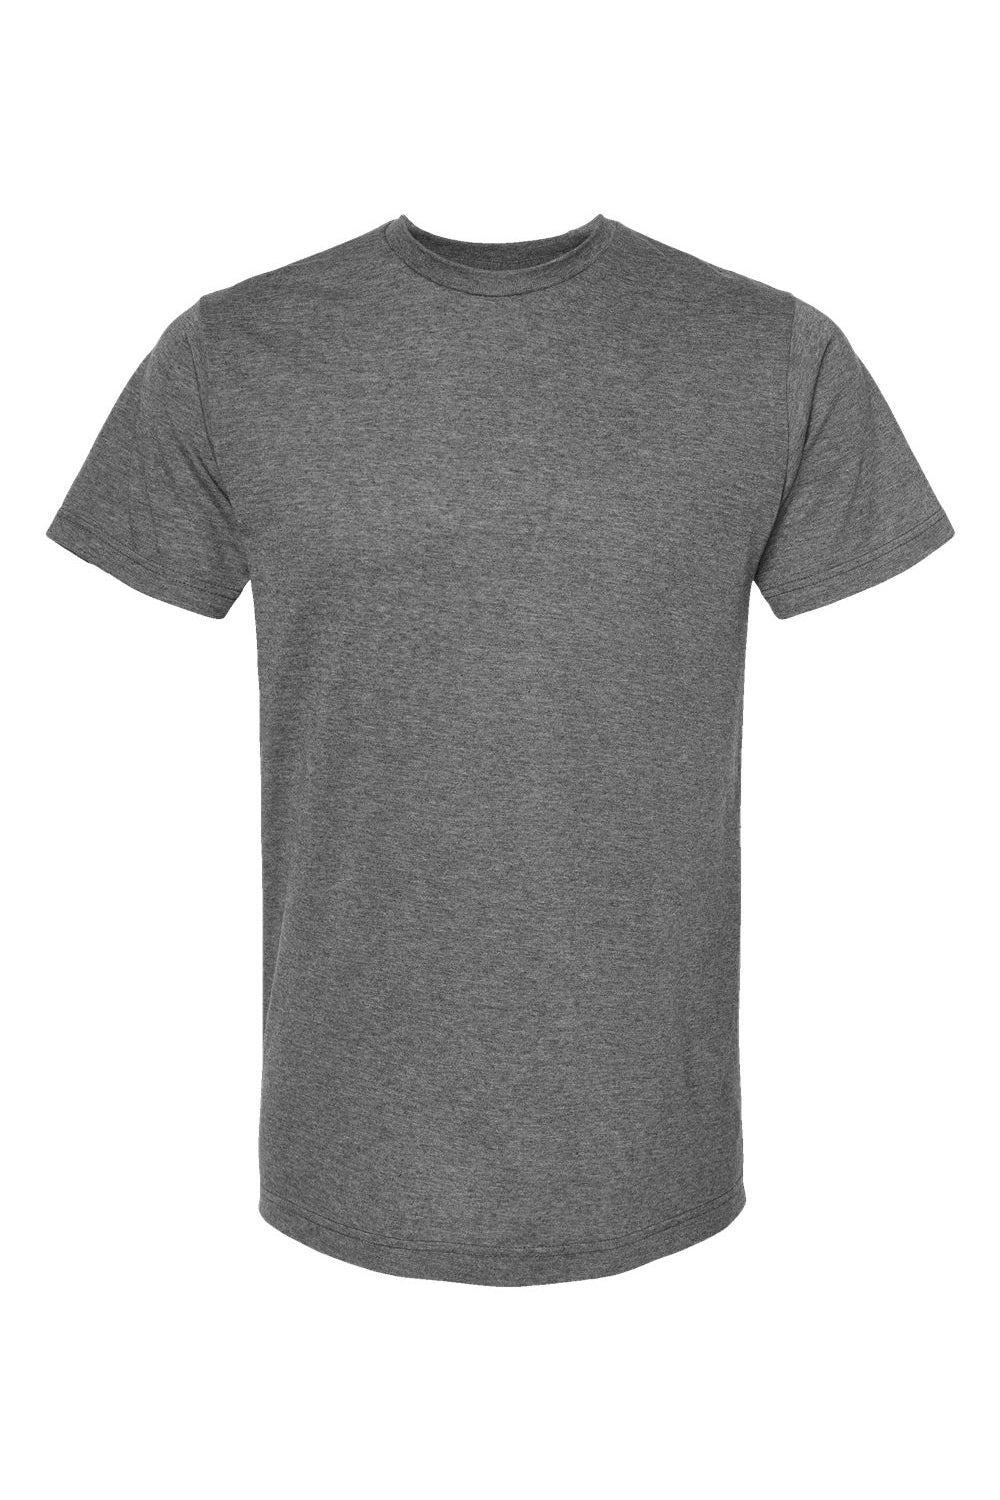 Tultex 241 Mens Poly-Rich Short Sleeve Crewneck T-Shirt Heather Charcoal Grey Flat Front